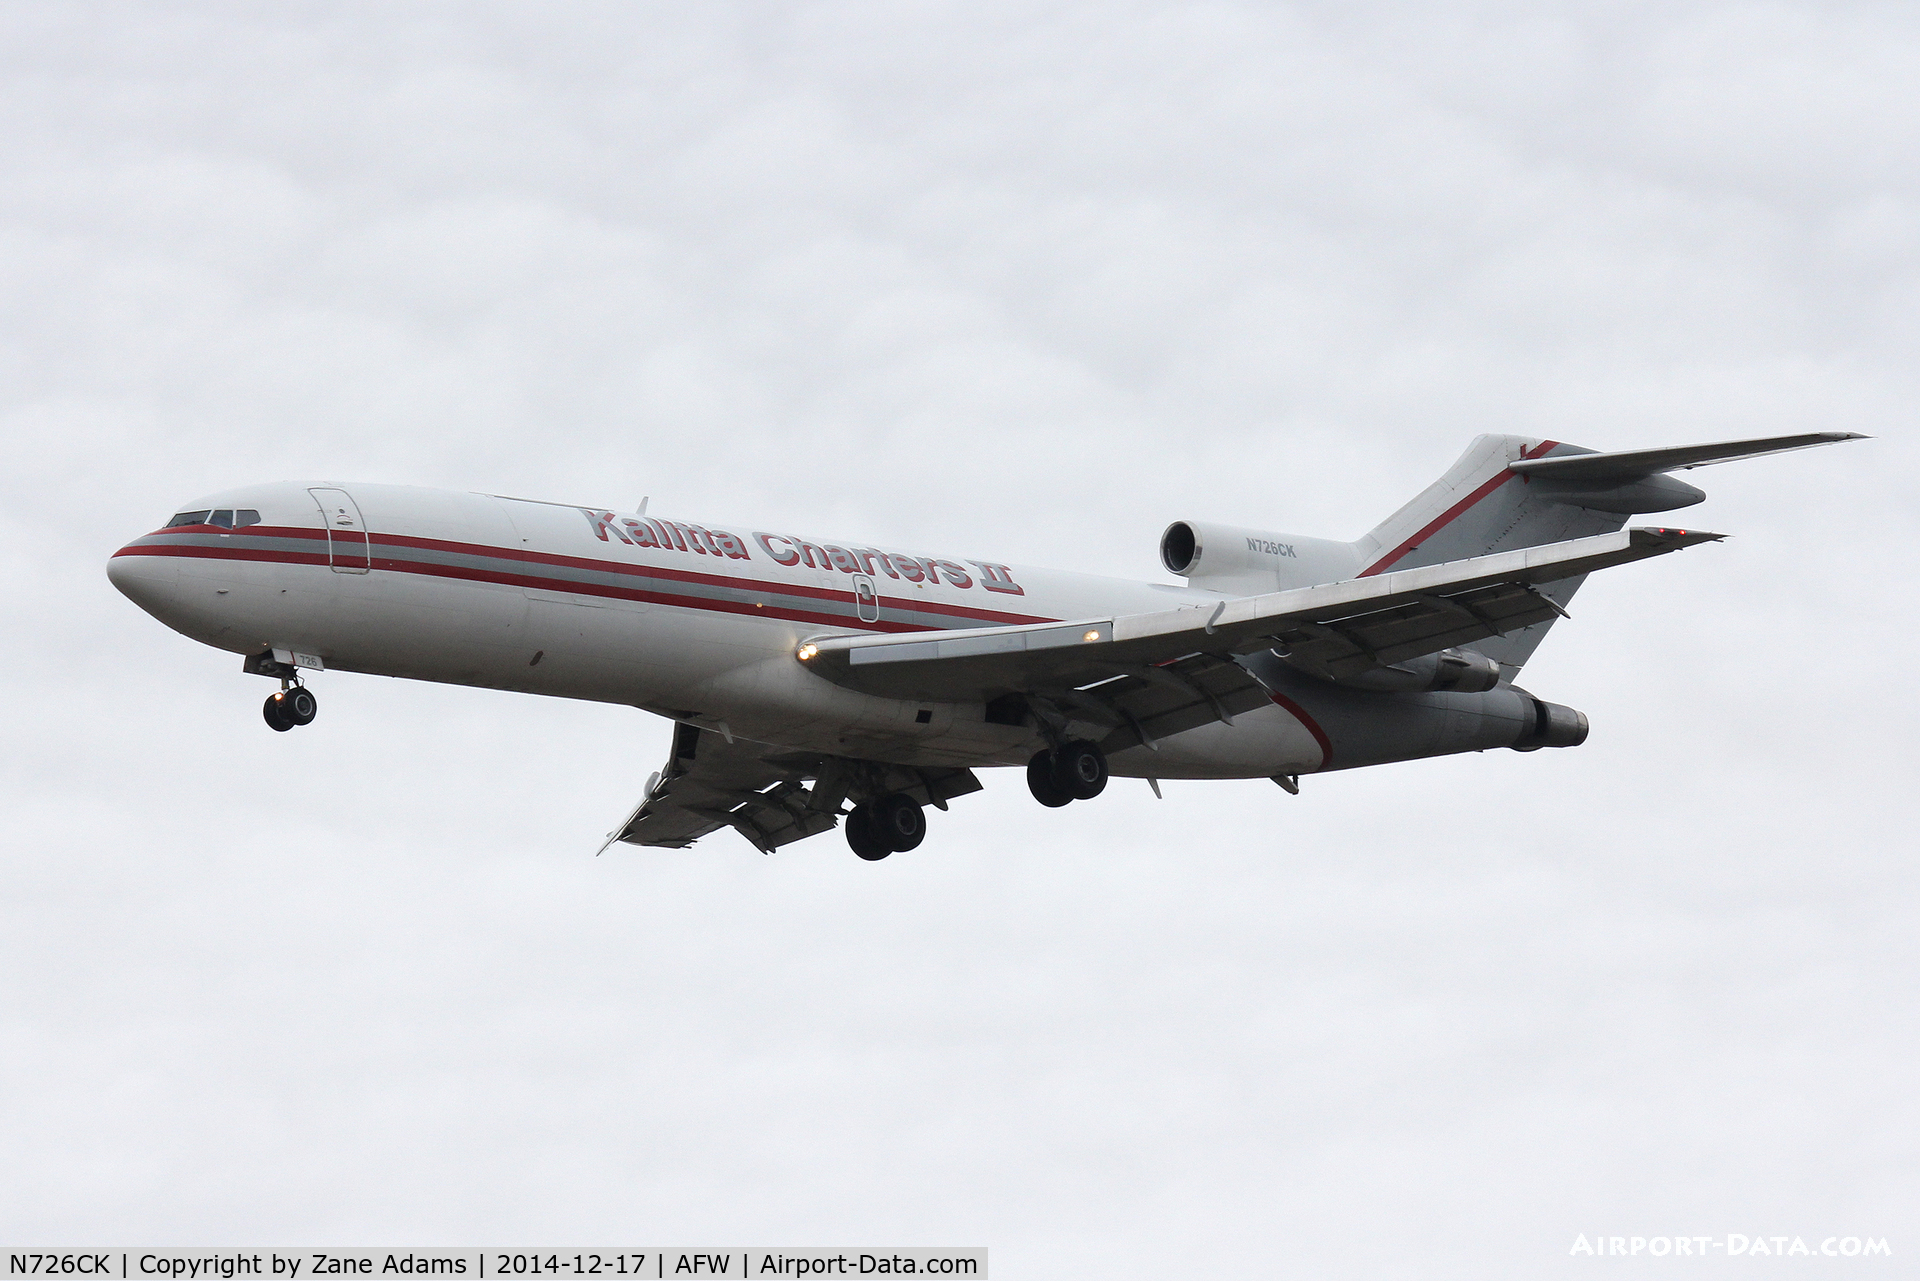 N726CK, 1980 Boeing 727-2M7 C/N 21951, Landing at Alliance Fort Worth.